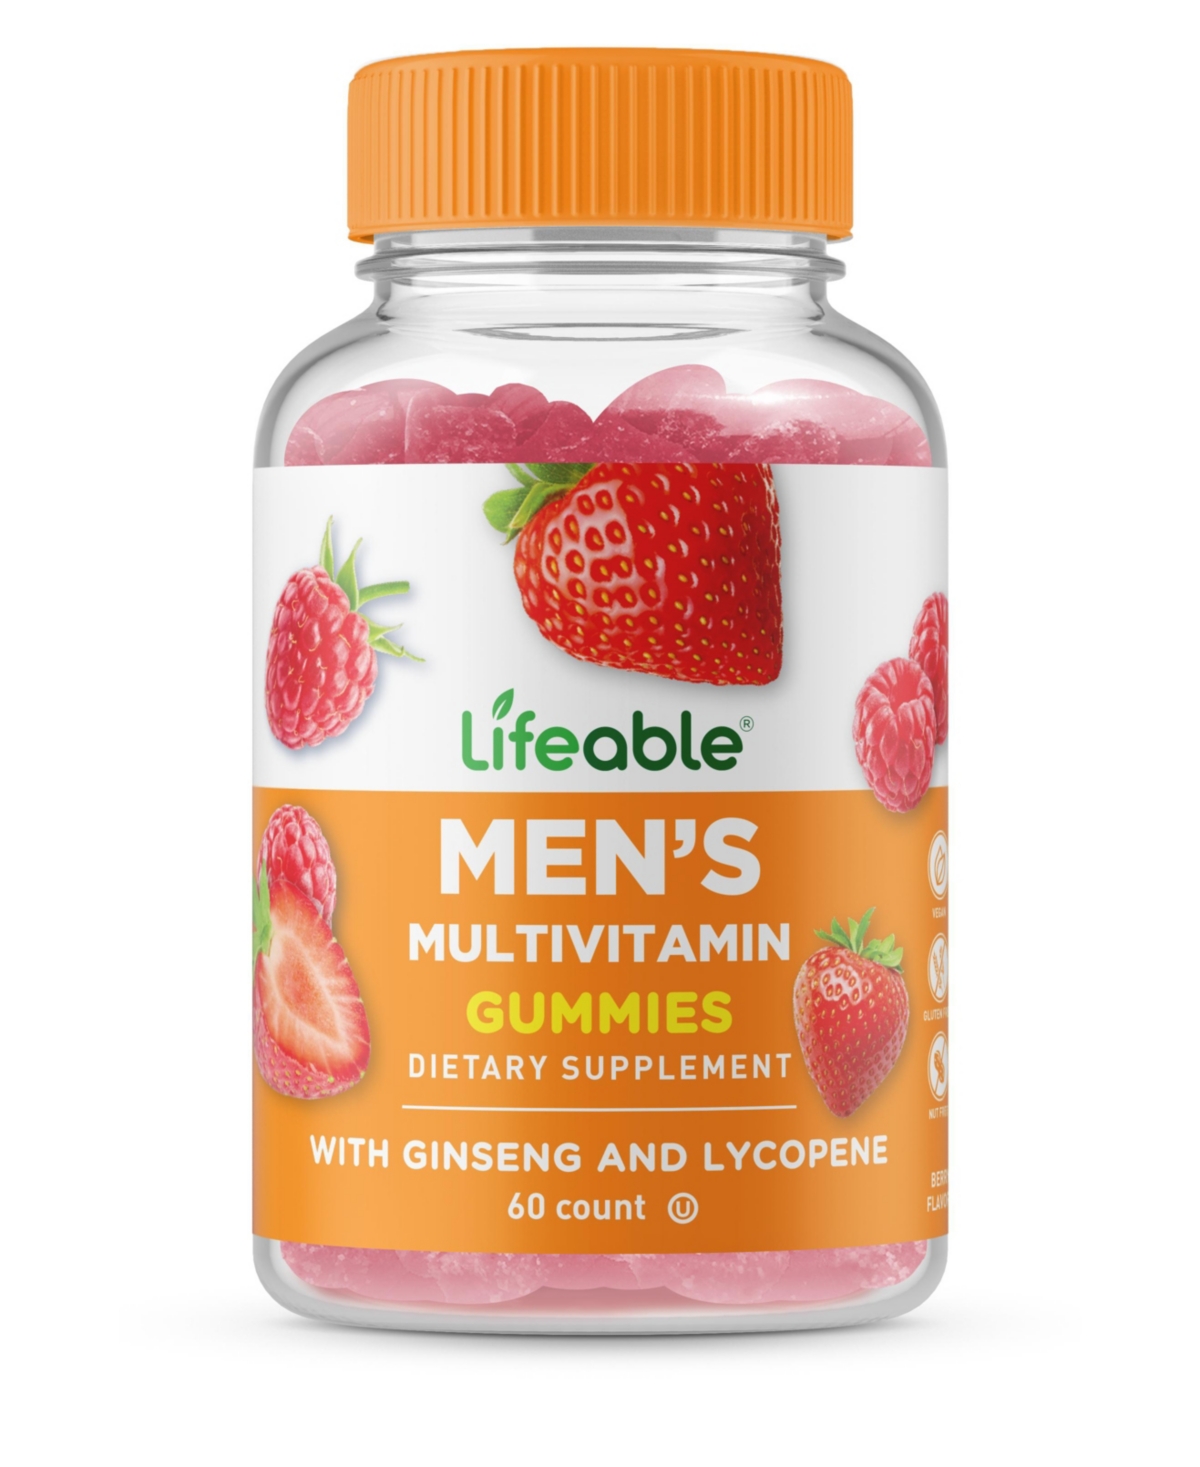 Multivitamin for Men Gummies - Immunity, Digestion, Bones, And Skin - Great Tasting Natural Flavor, Dietary Supplement Vitamins - 60 Gummies